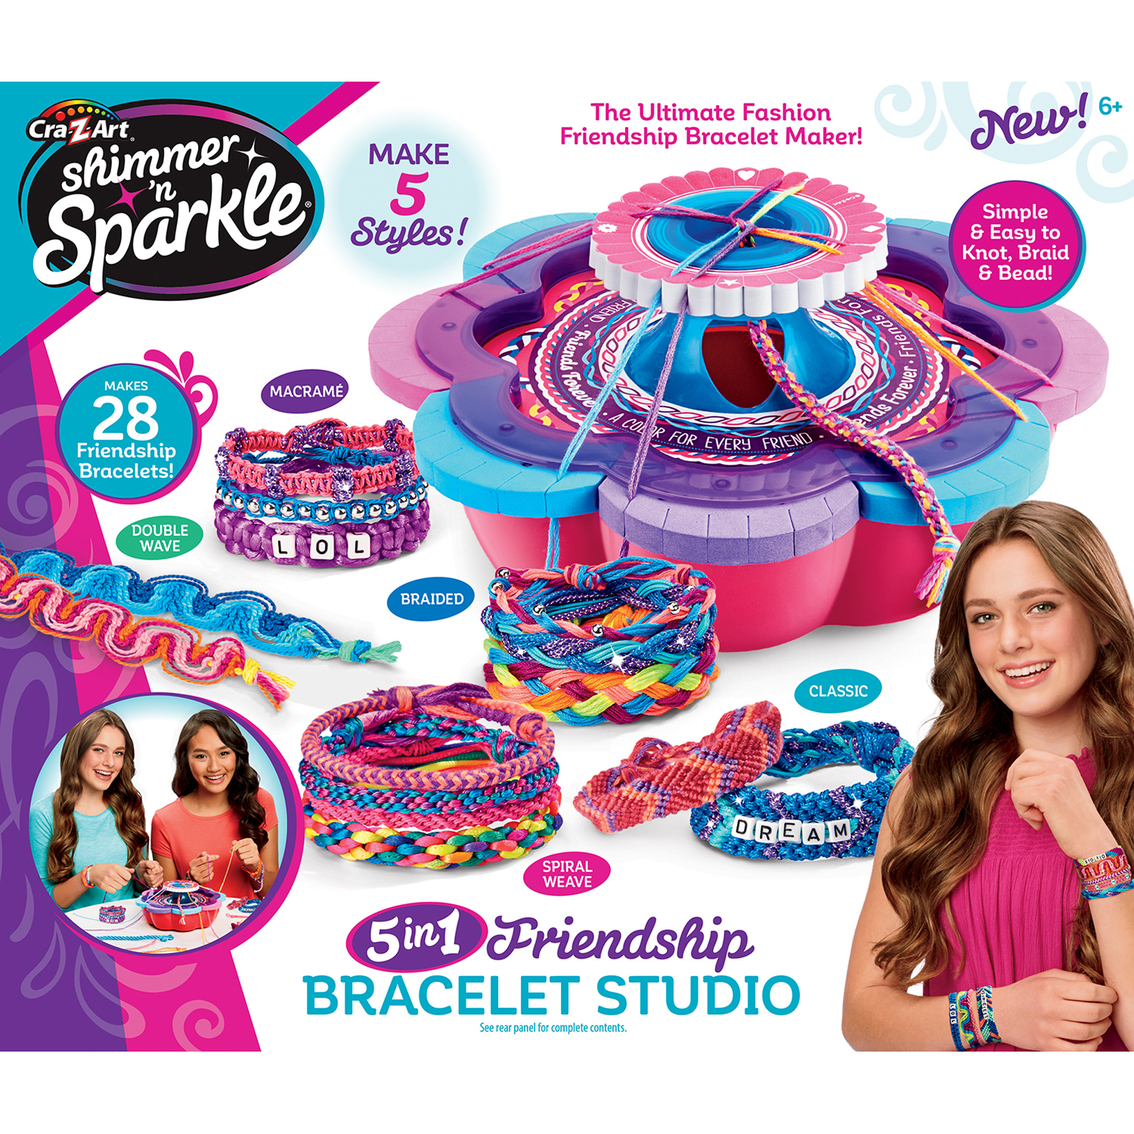 Cra-Z-Art Shimmer 'n Sparkle 5 in 1 Friendship Bracelet Studio Kit